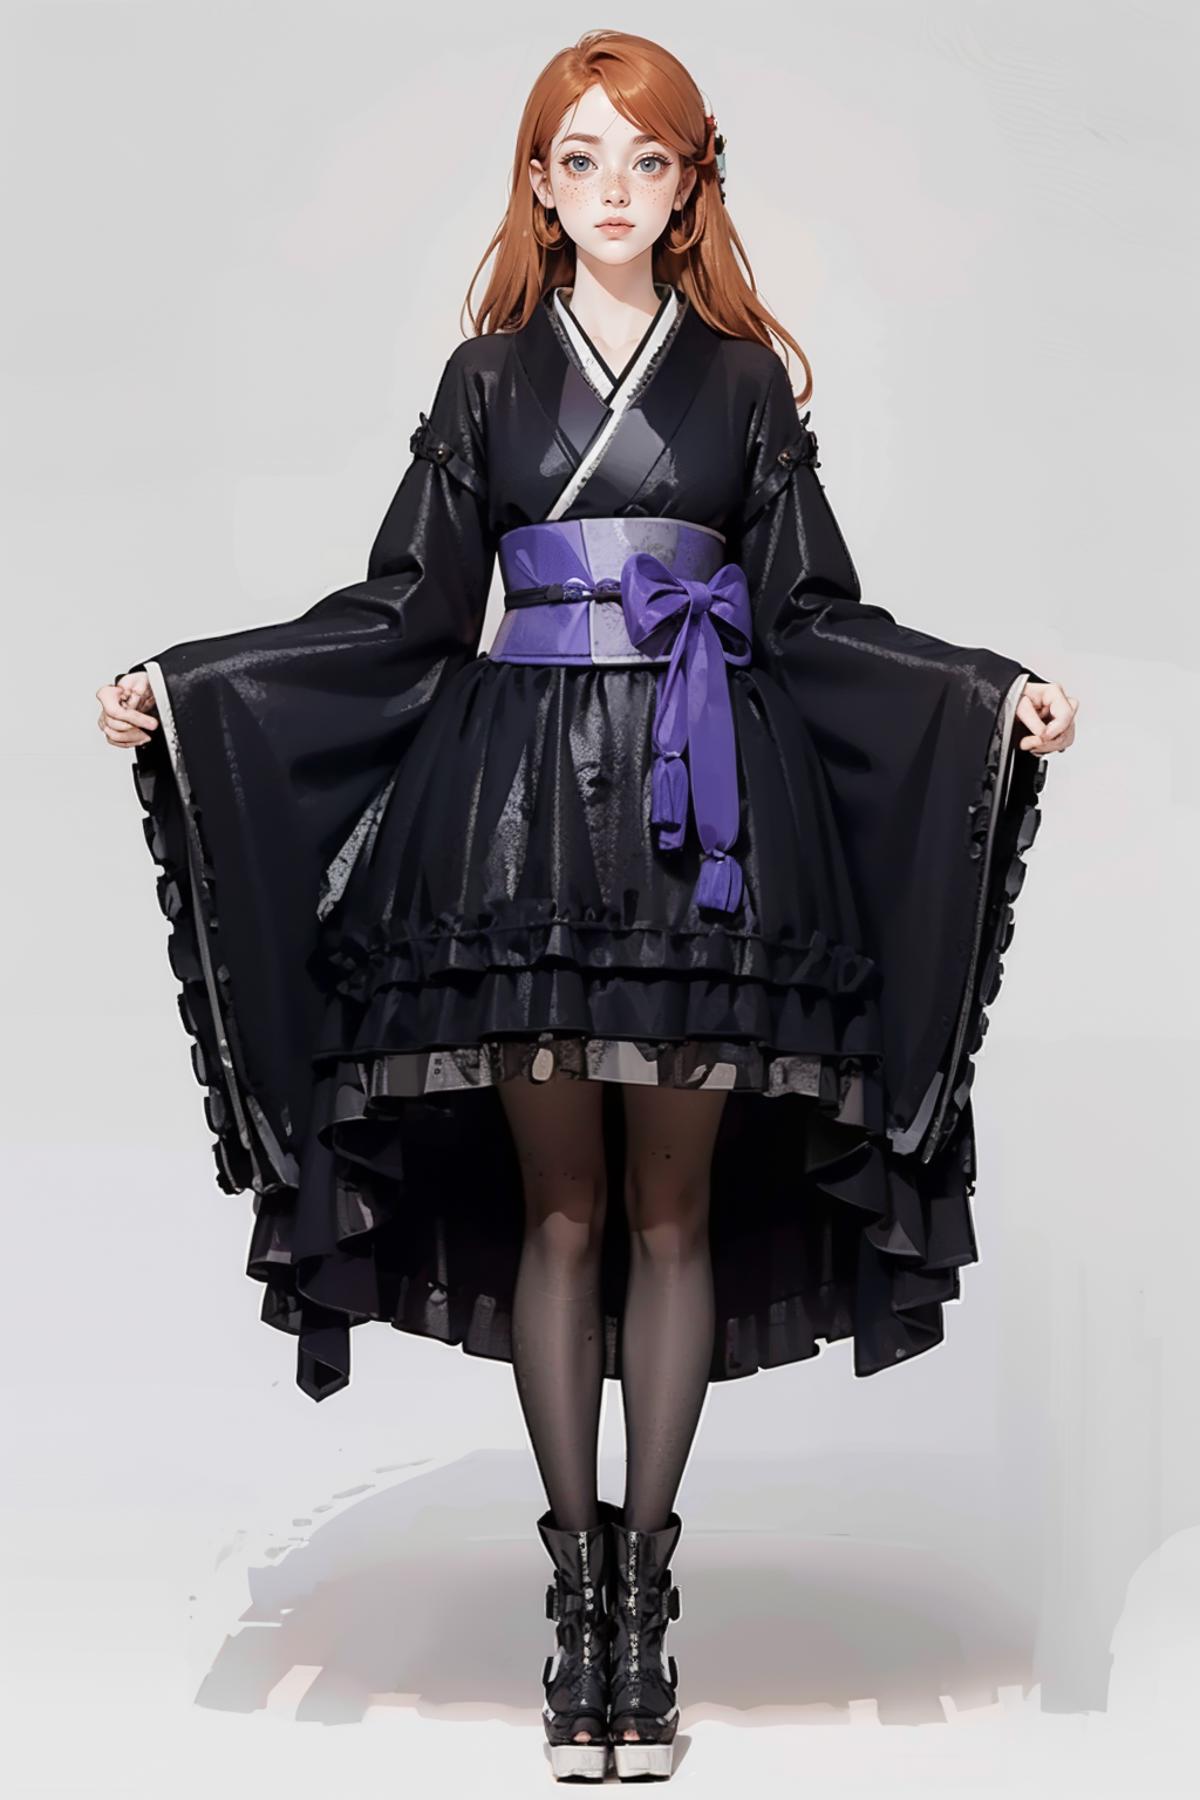 Gothic Kimono image by freckledvixon